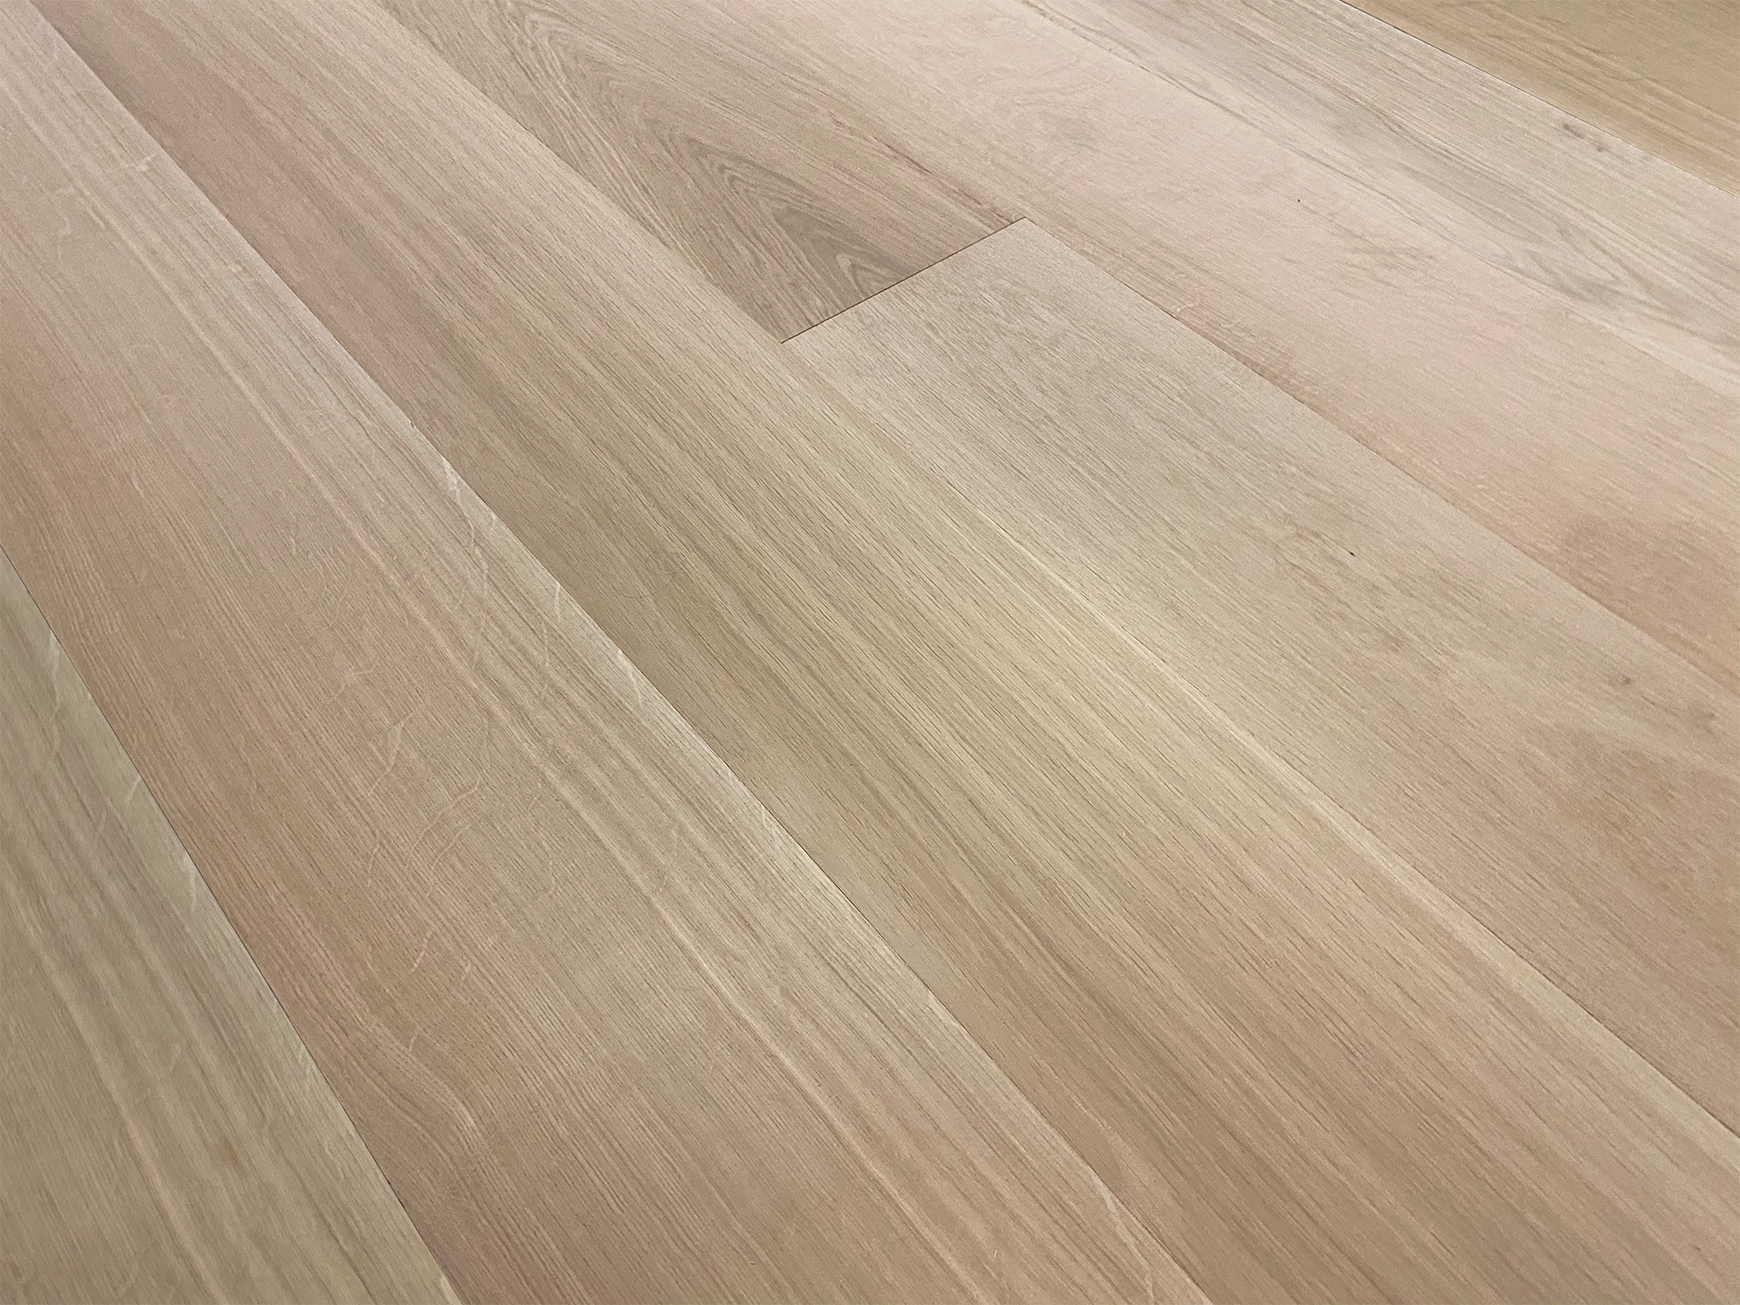 French Oak - Prime Grade - Unfinished Hardwood